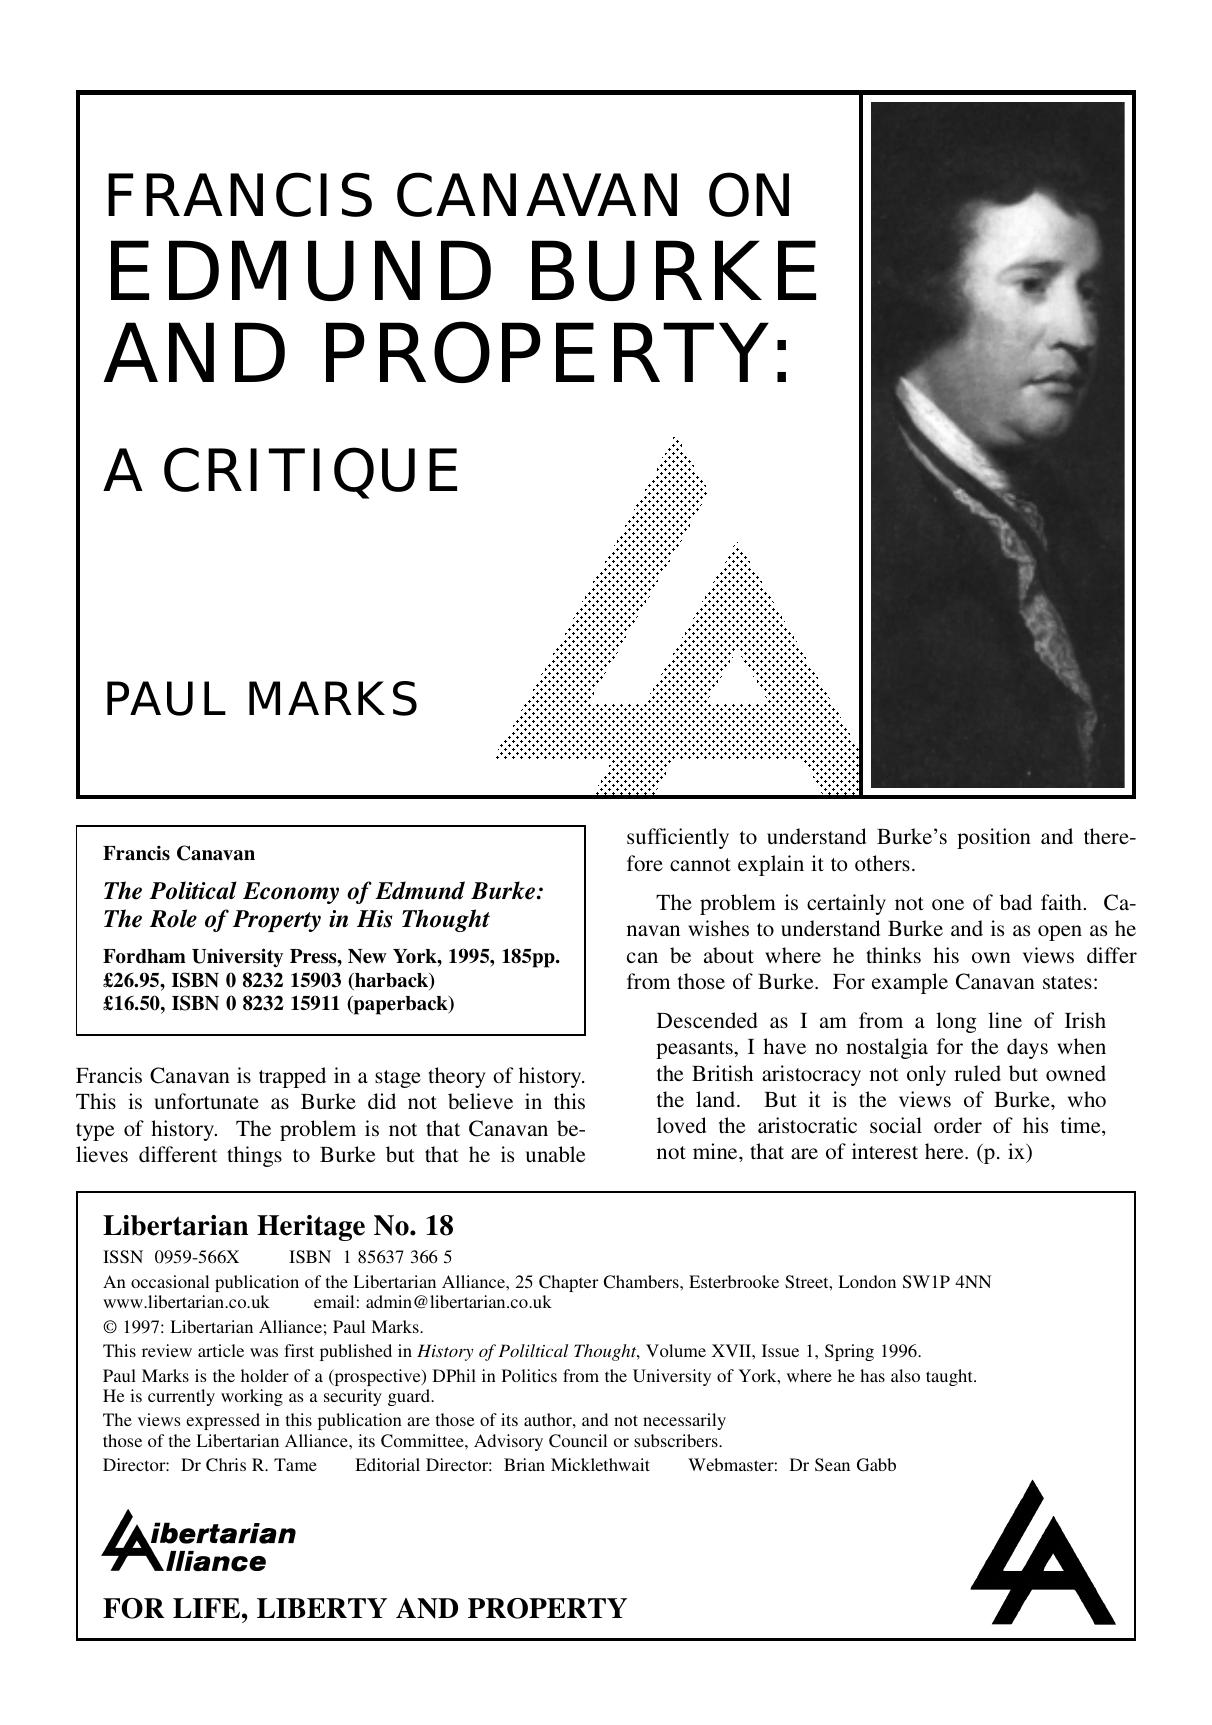 Francis Canavan On Edmund Burke And Property [A Critique] Essay